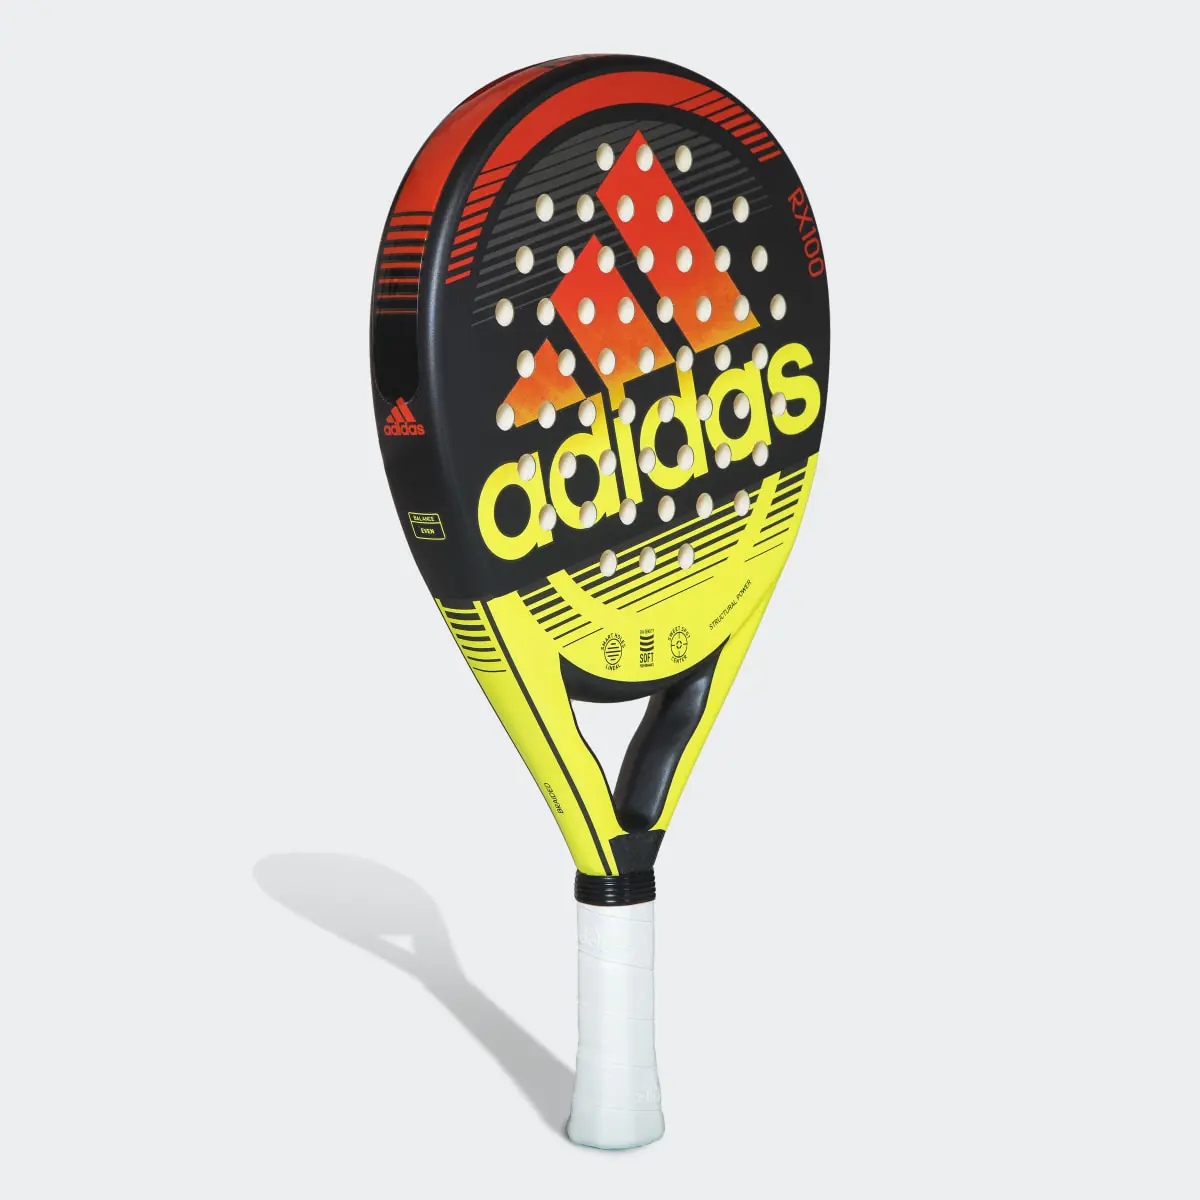 Adidas RX 100 Racket. 3